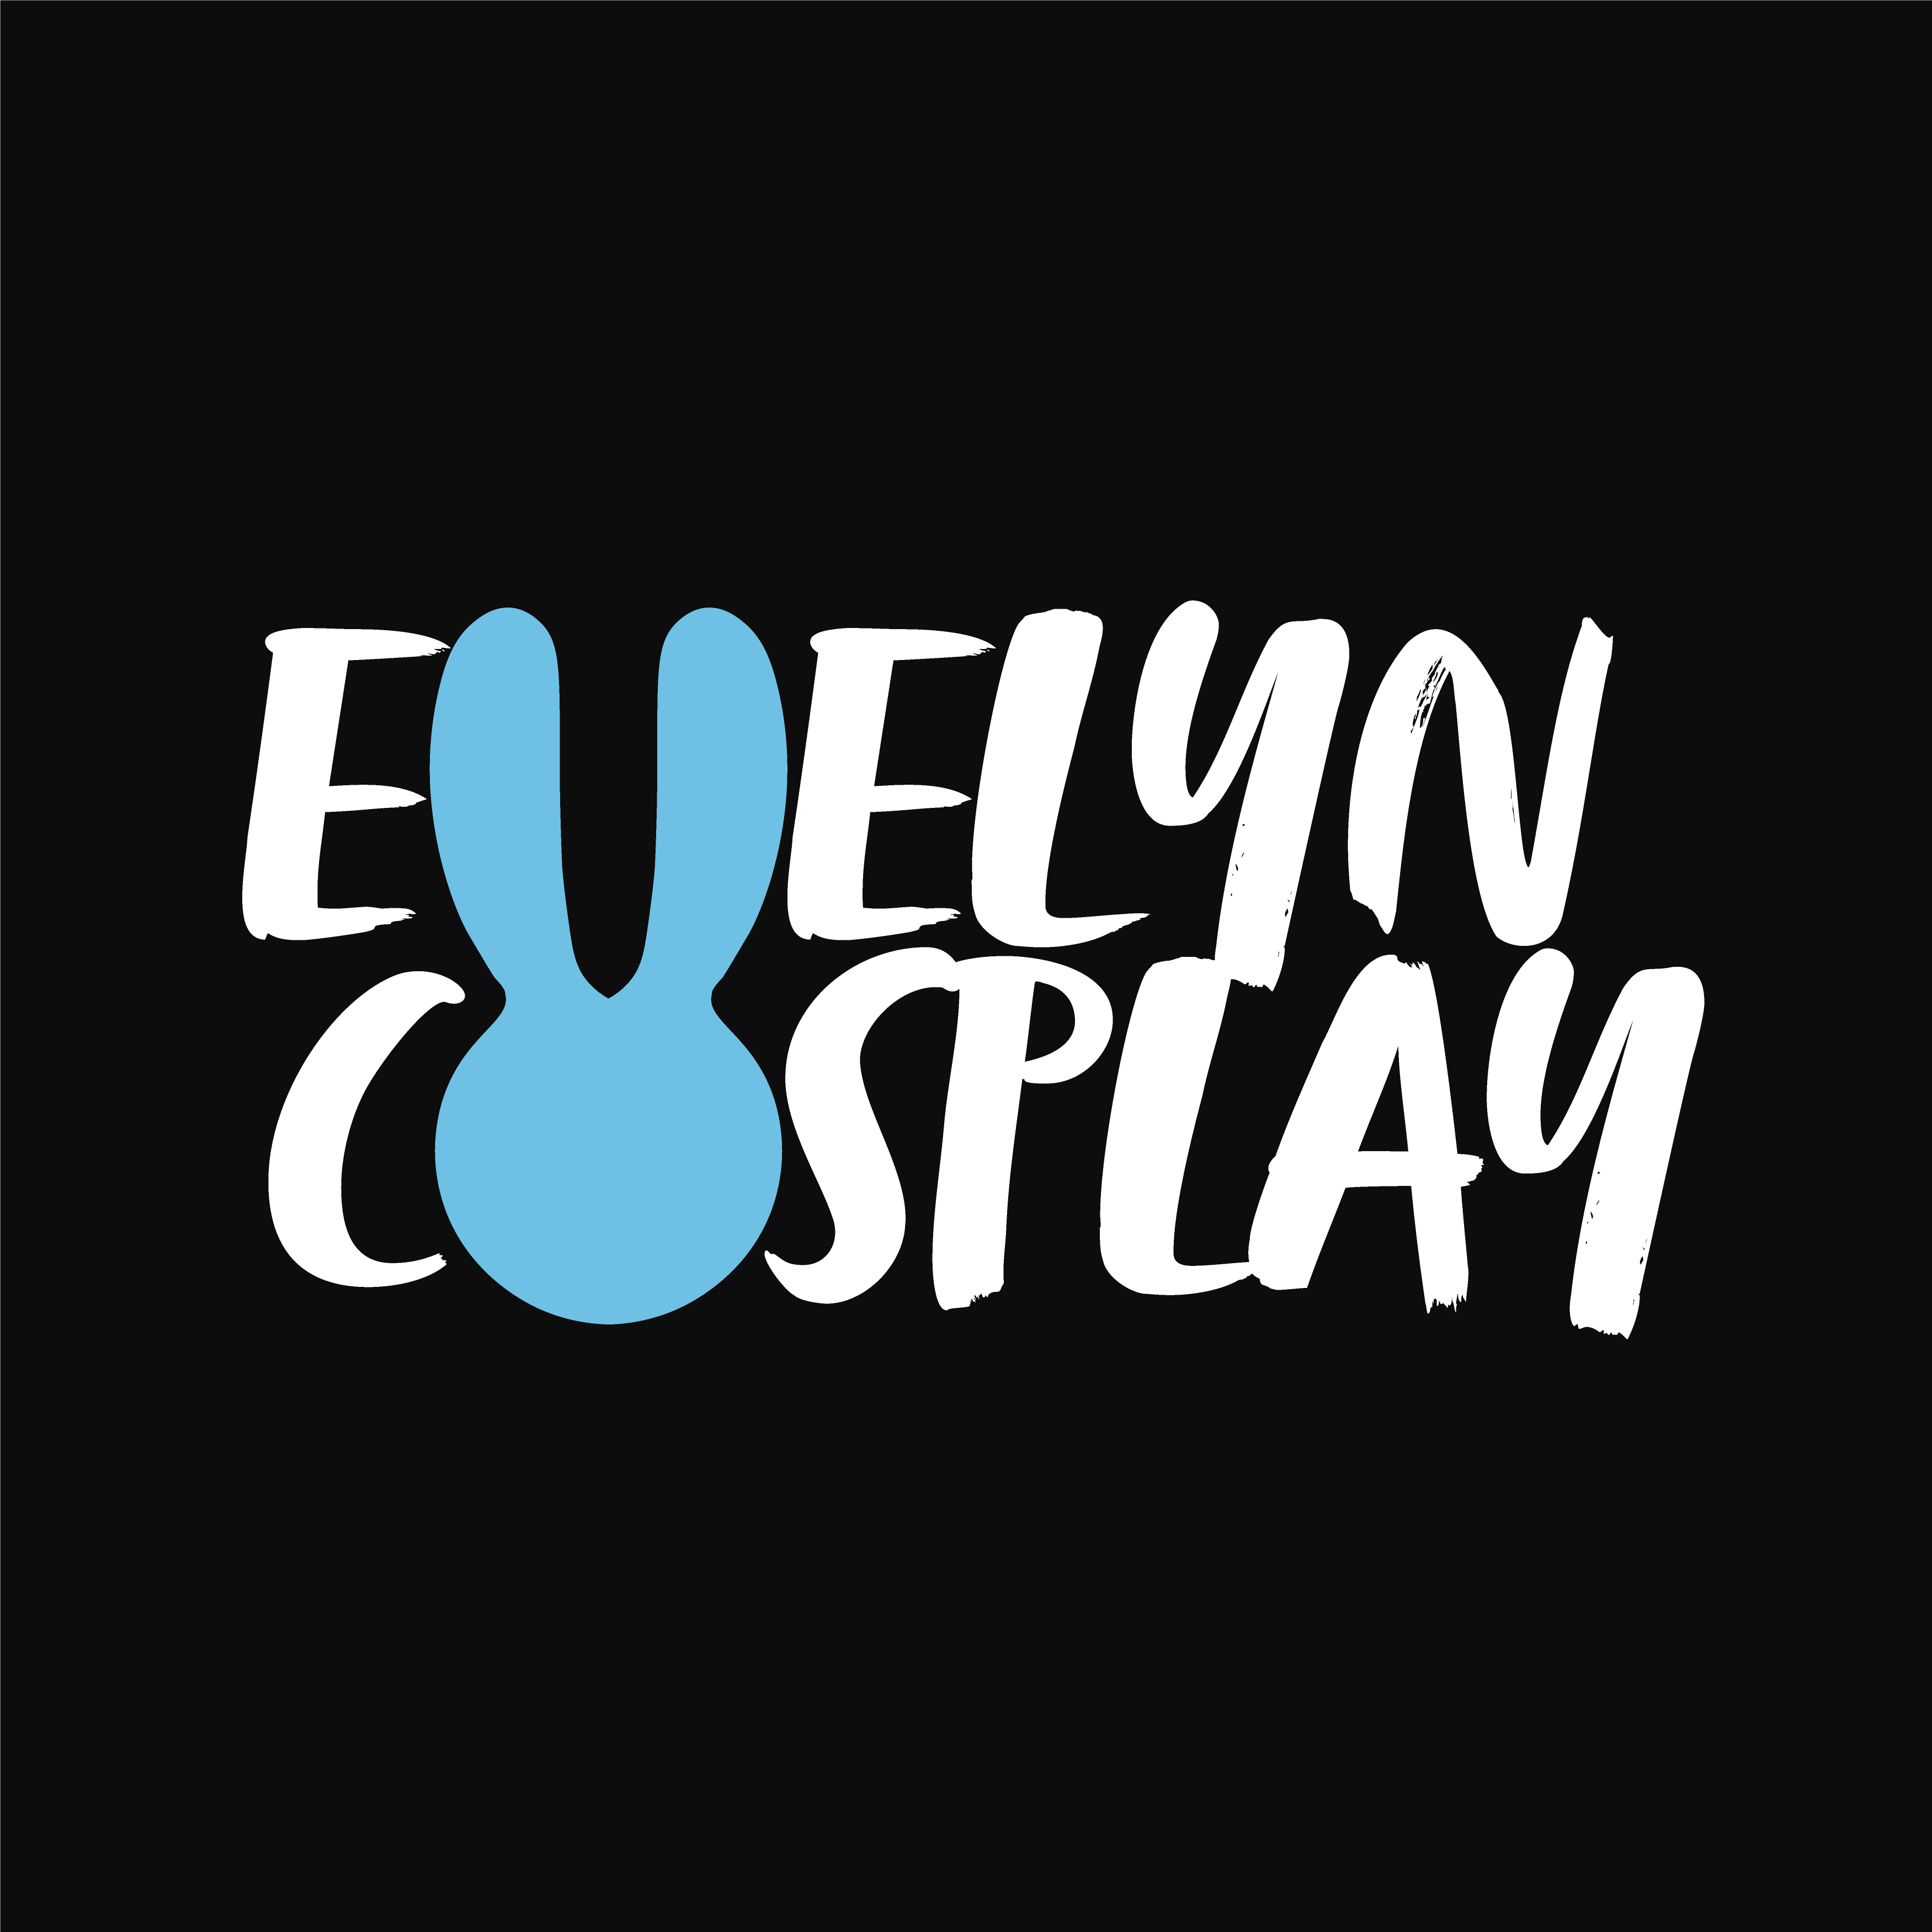 Logo Evelyn Cosplay